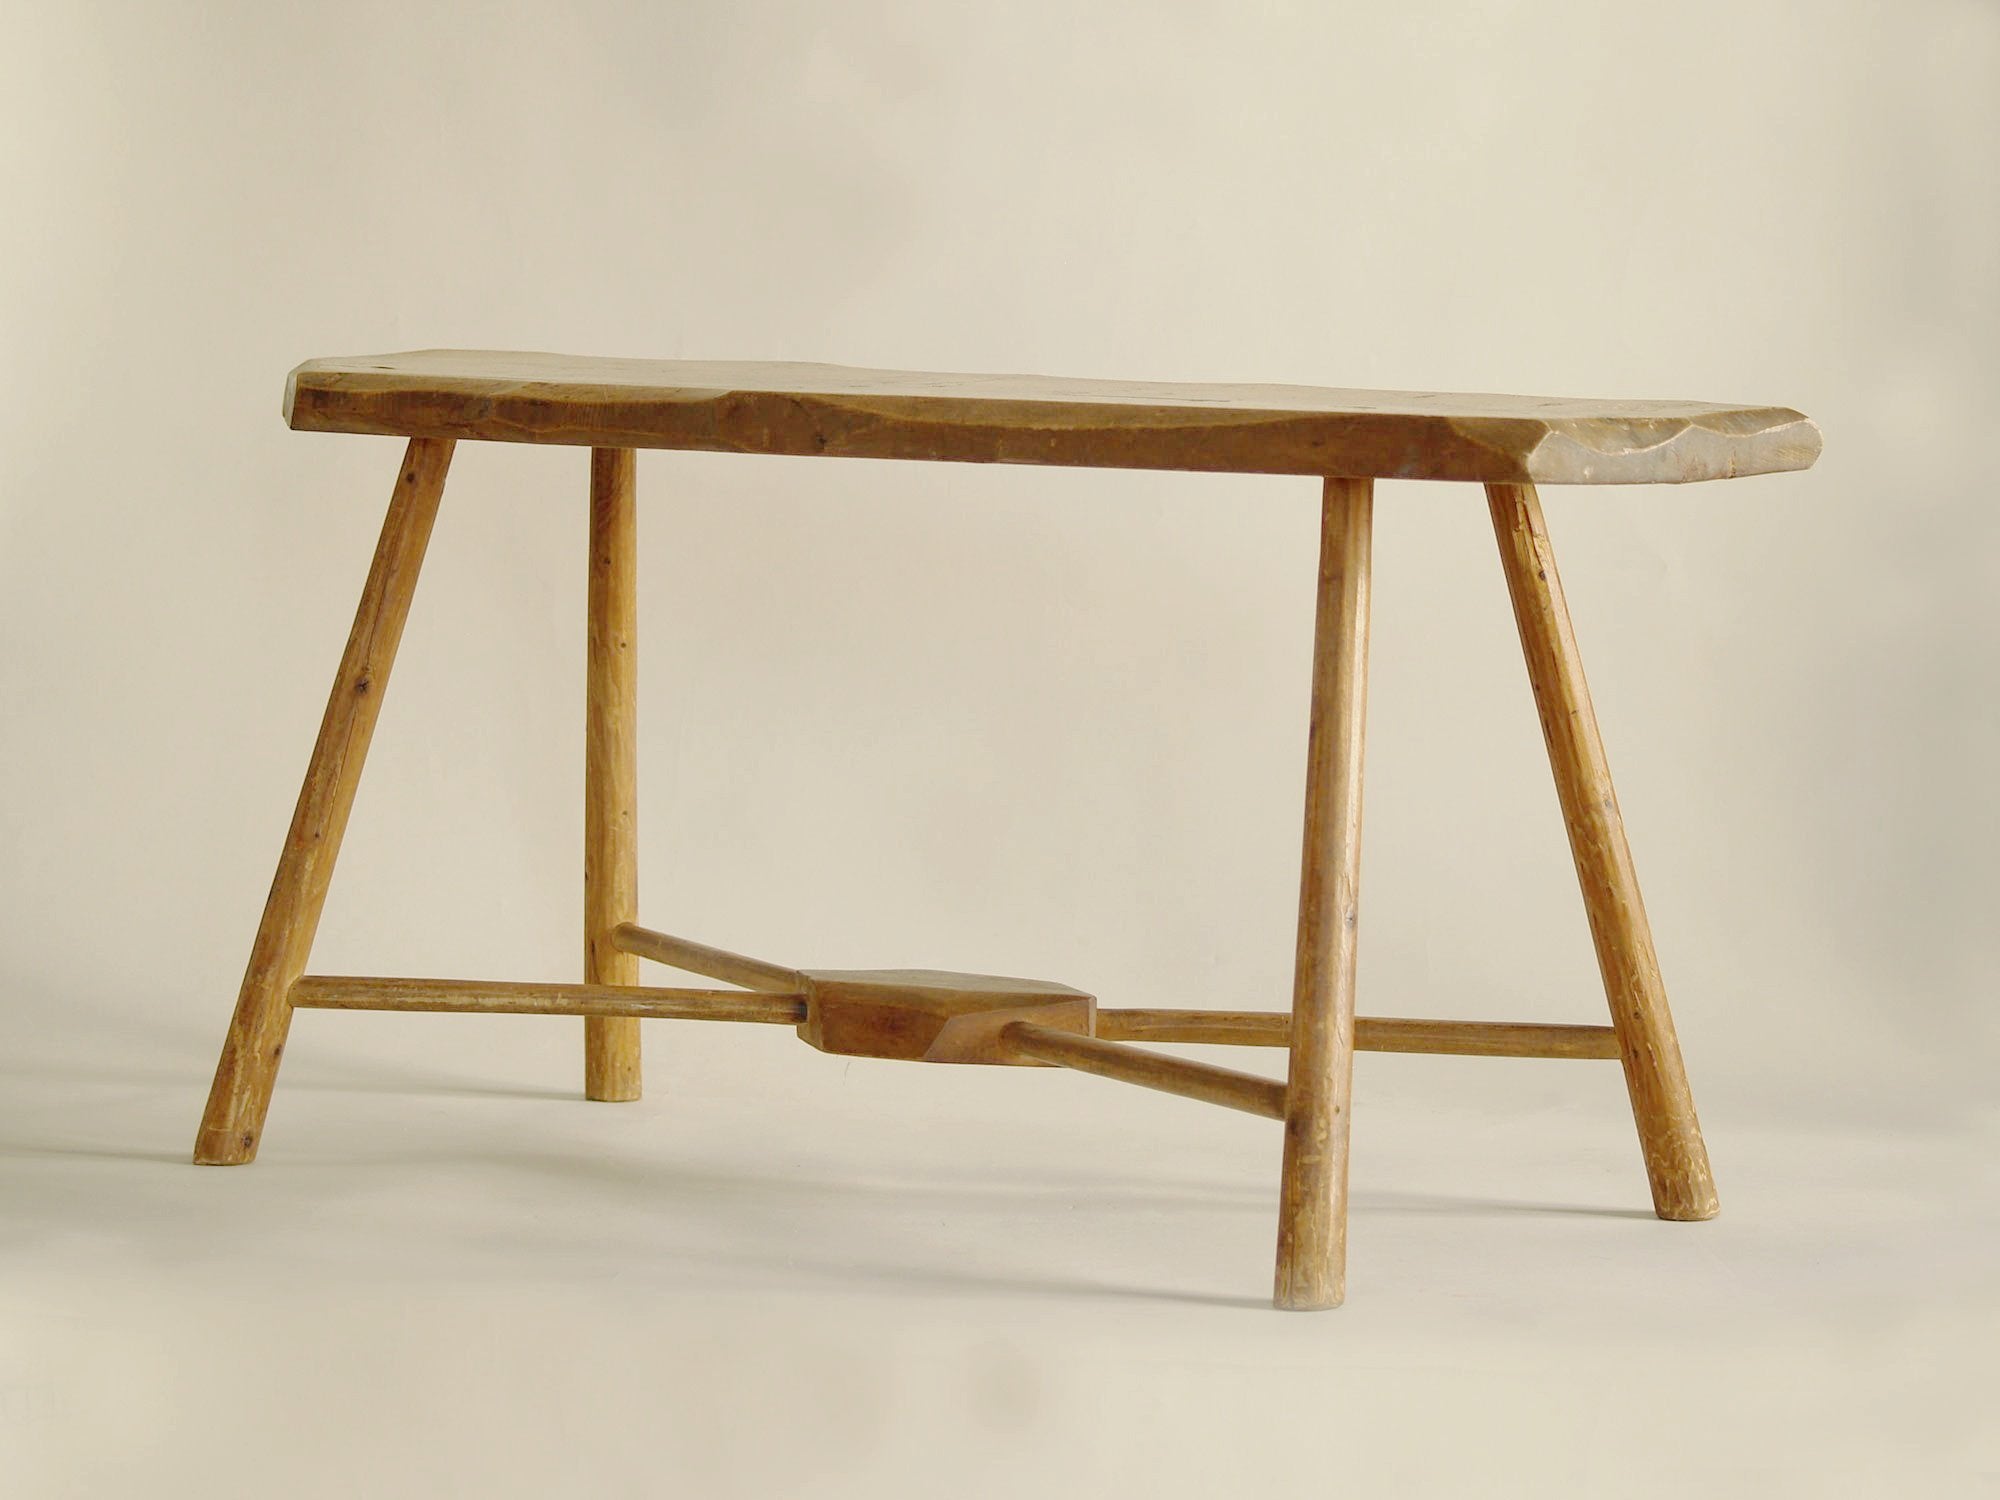 Table d'appoint ou banc wabi sabi en bois sculpté, Europe du Nord (vers 1950)..shepherd’s wabi sabi natural wood bench or table, Northern Europe (circa 1950)